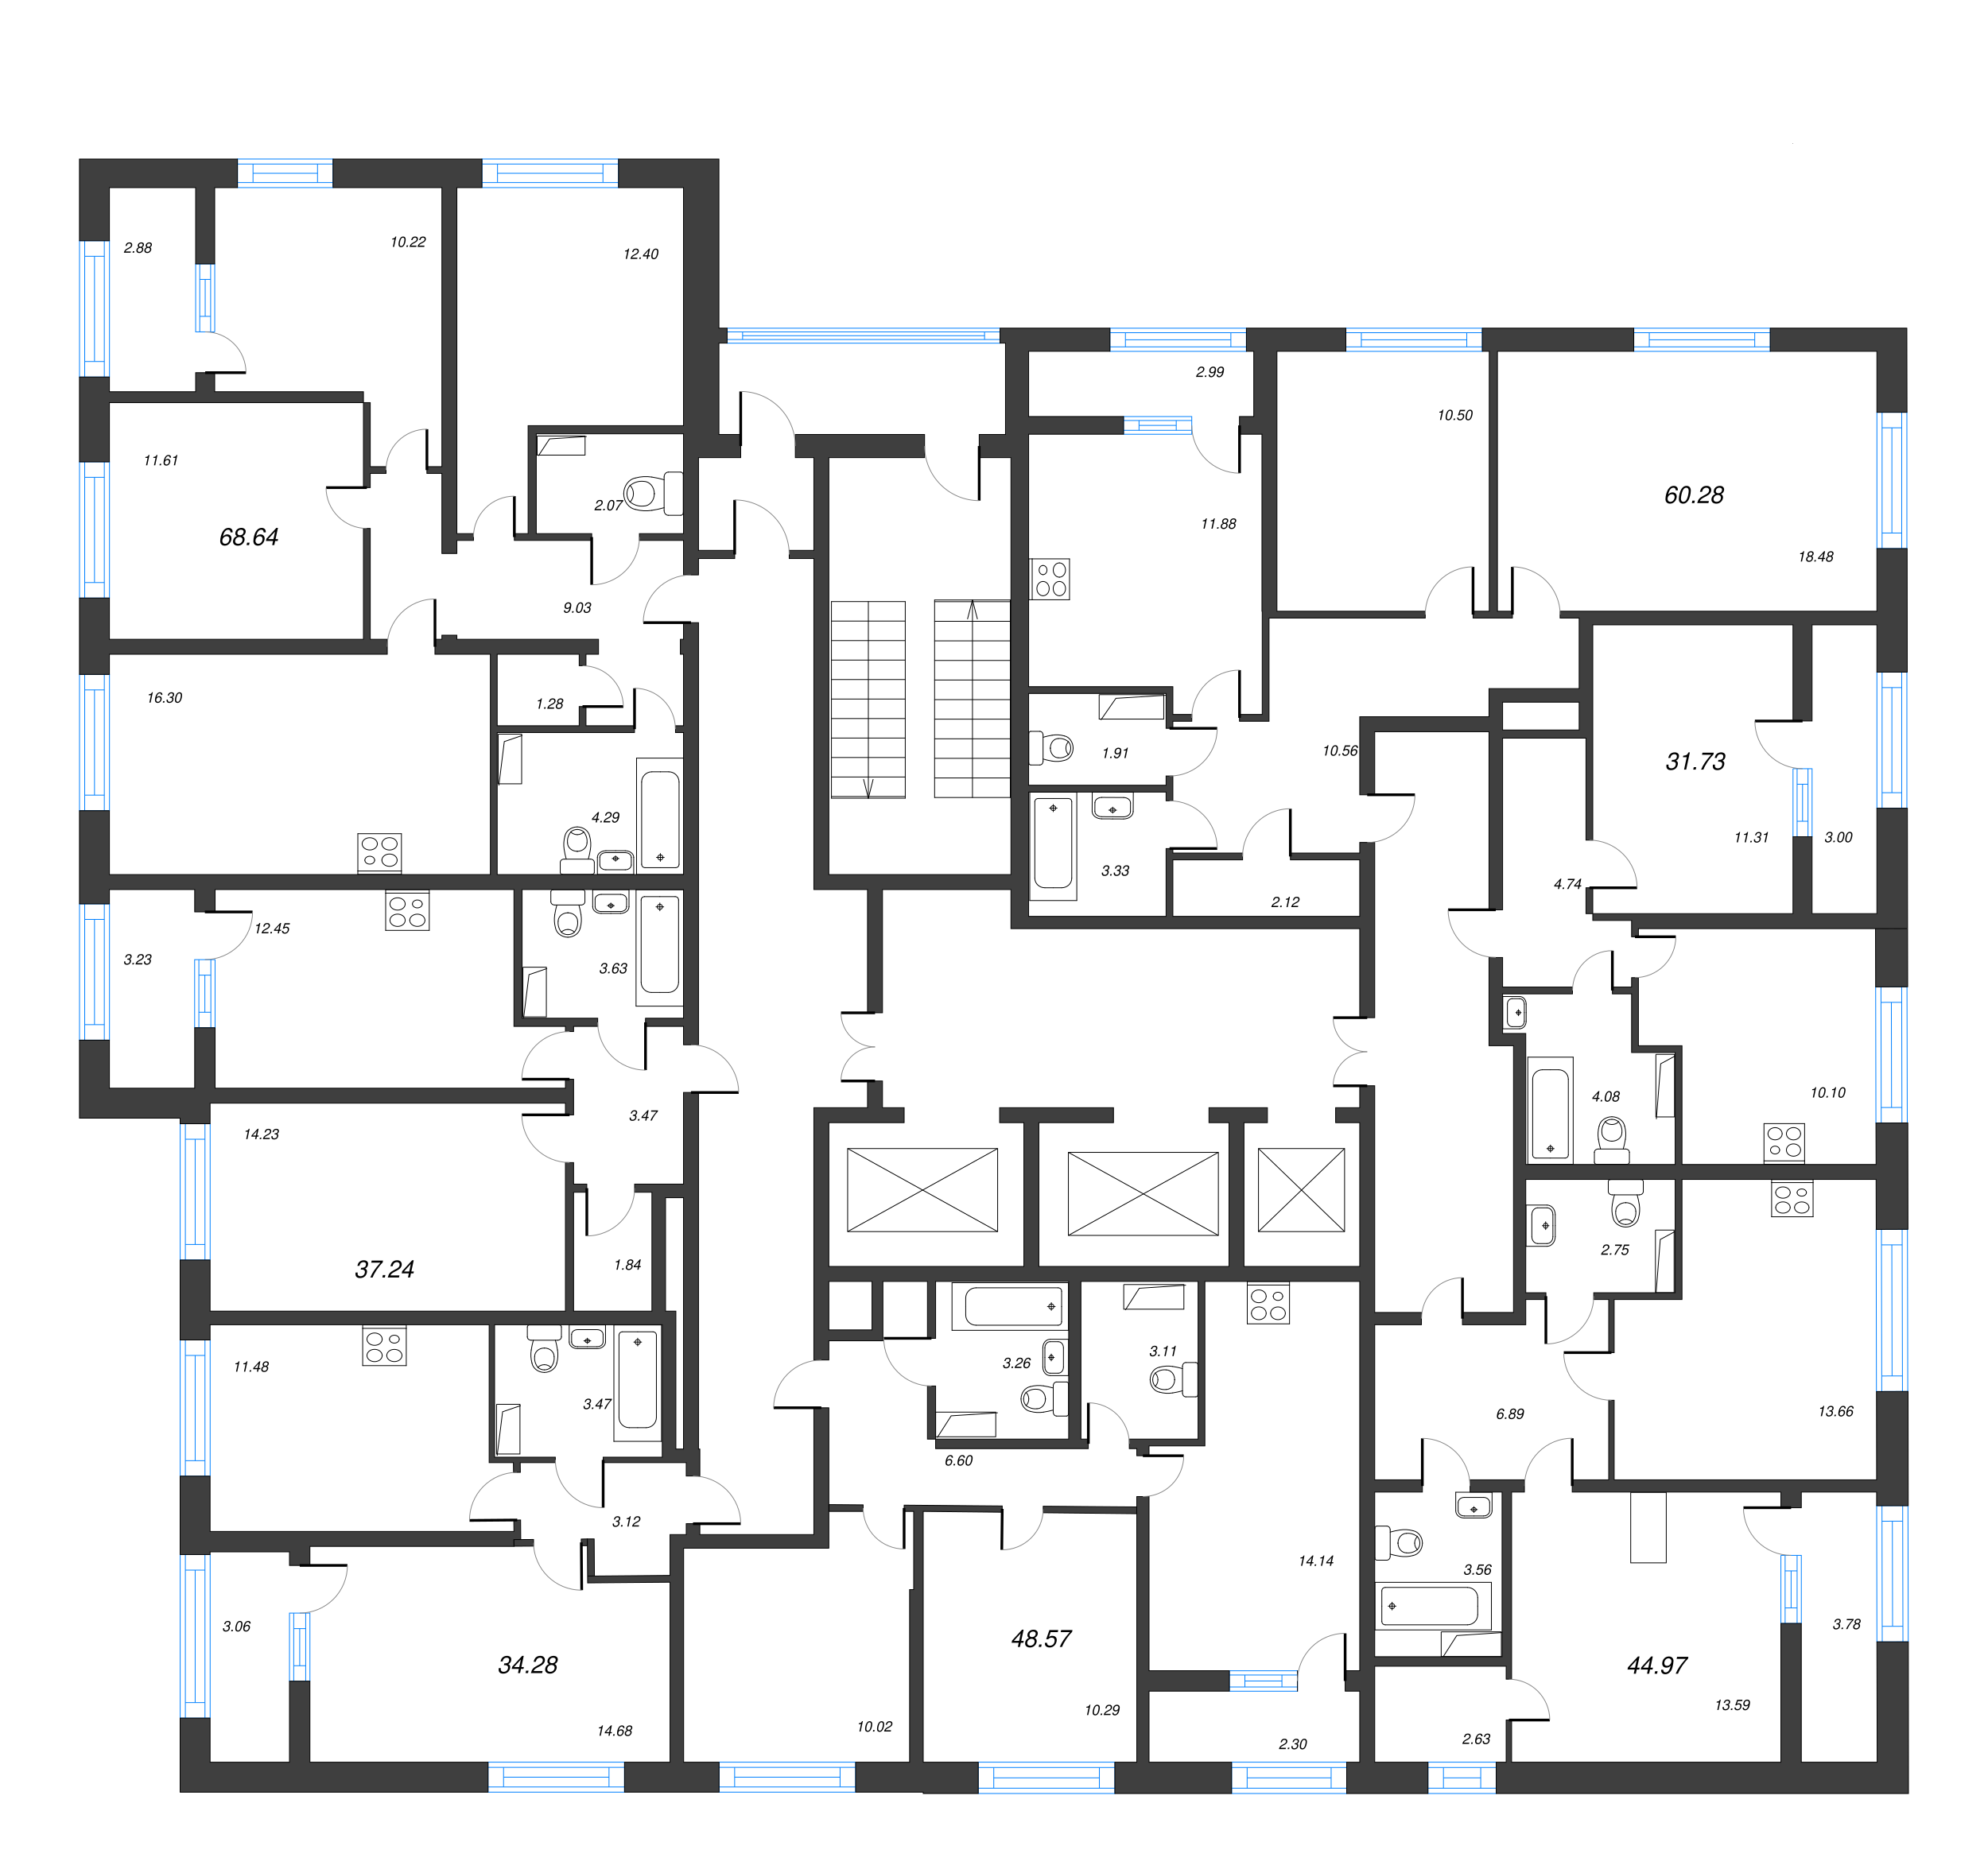 4-комнатная (Евро) квартира, 68.64 м² - планировка этажа